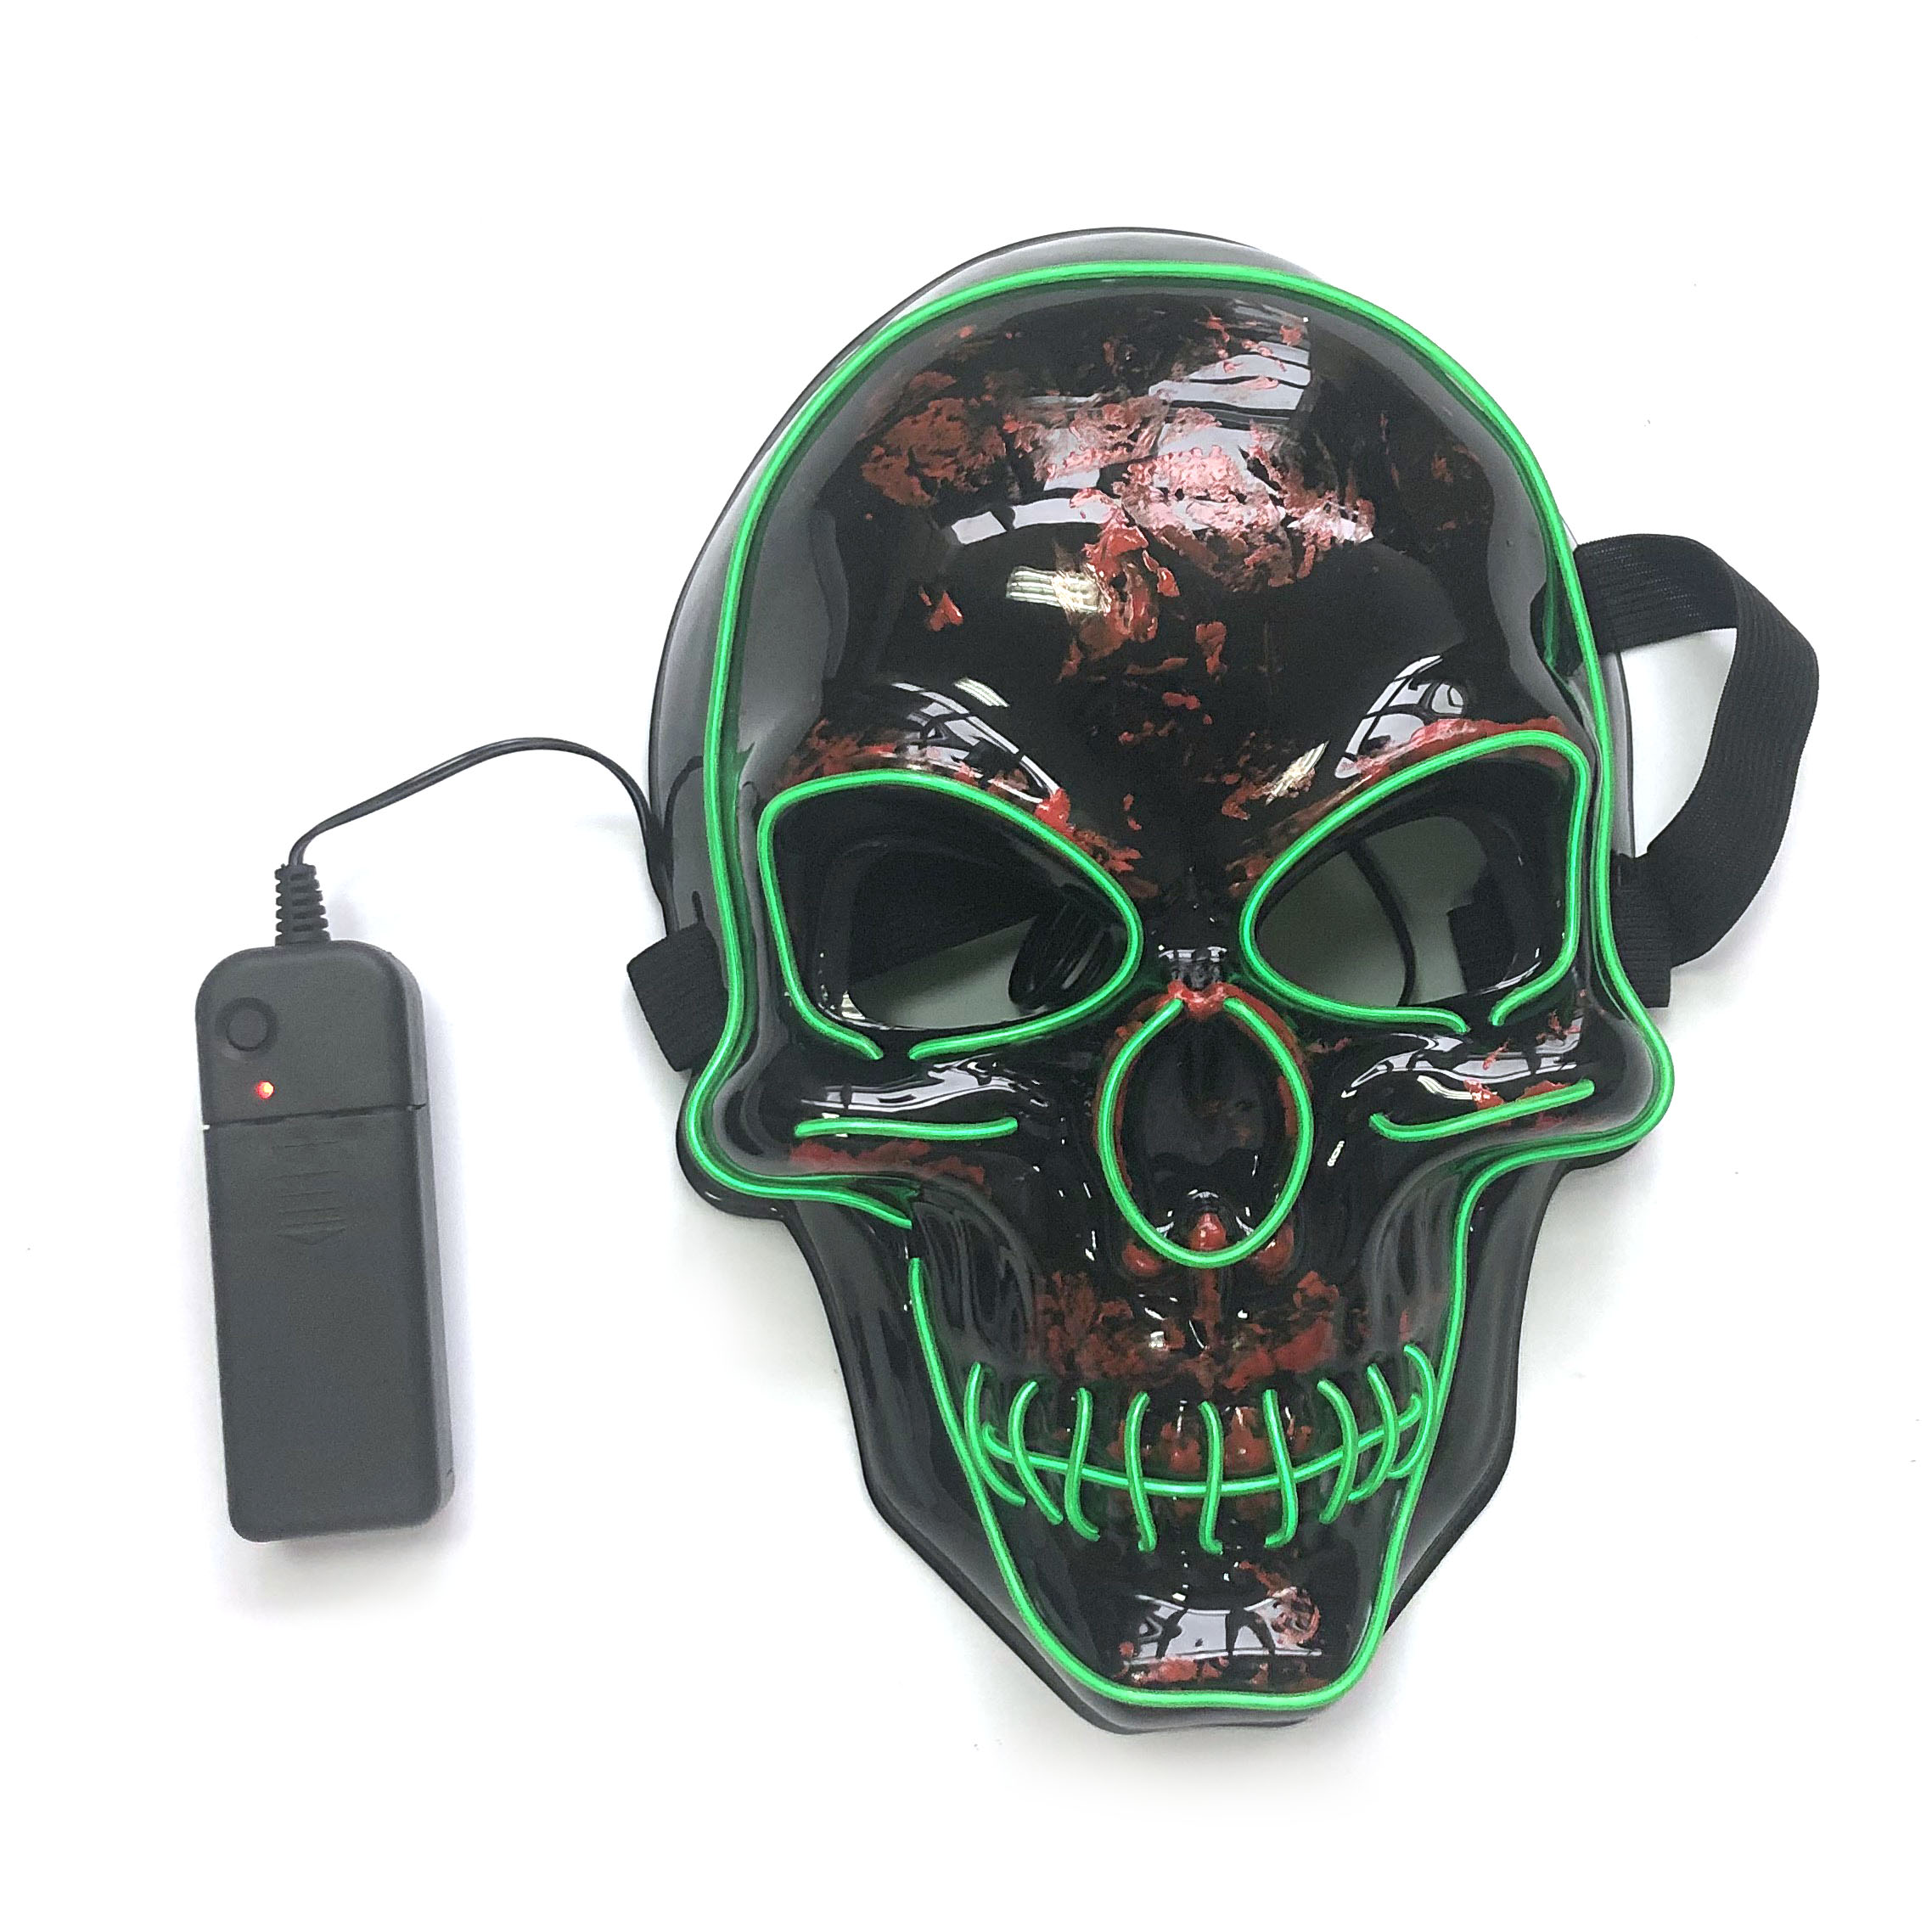 Halloween-LED-Mask-Skull-Glowing-Mask-Cold-Light-Mask-Party-EL-Mask-Light-Up-Masks-Glow-In-Dark-1743027-7